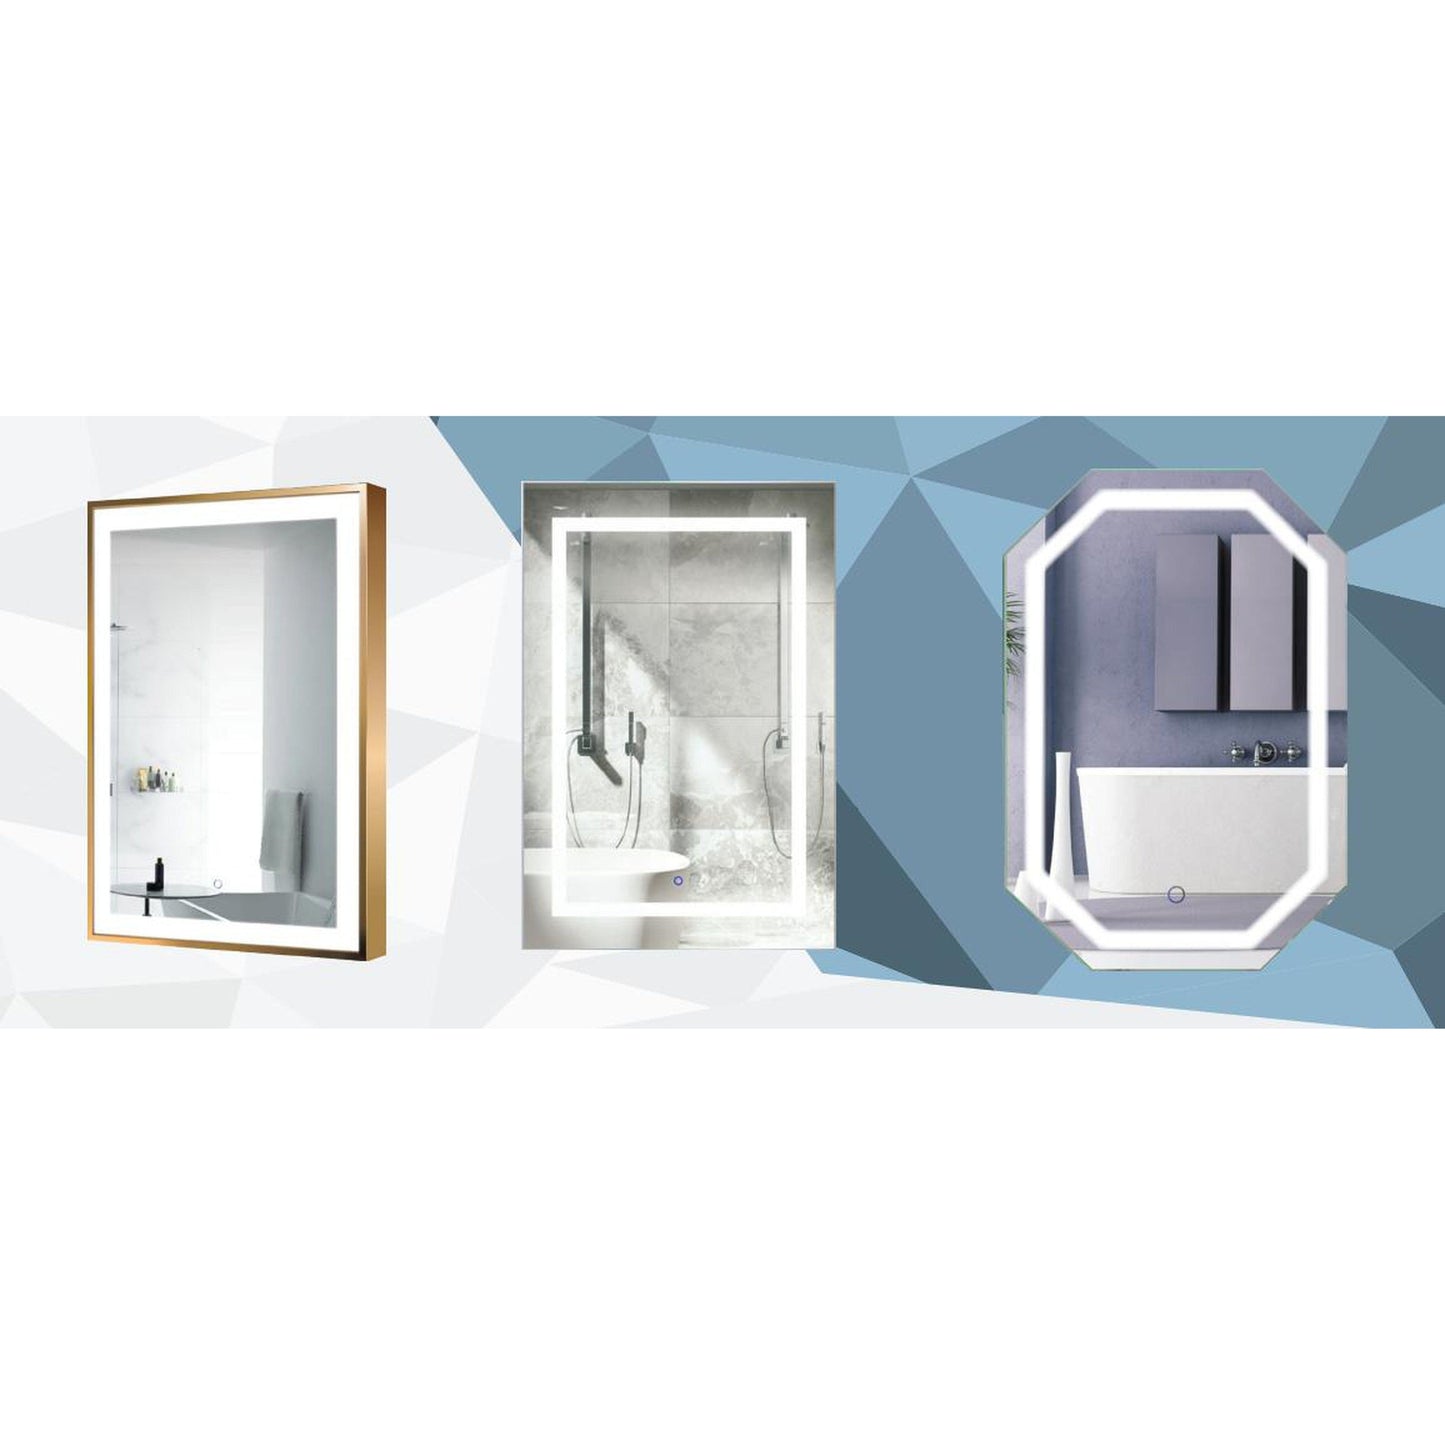 Krugg Reflections LED Bathroom Vanity Mirror Hardware Screws and Anchors